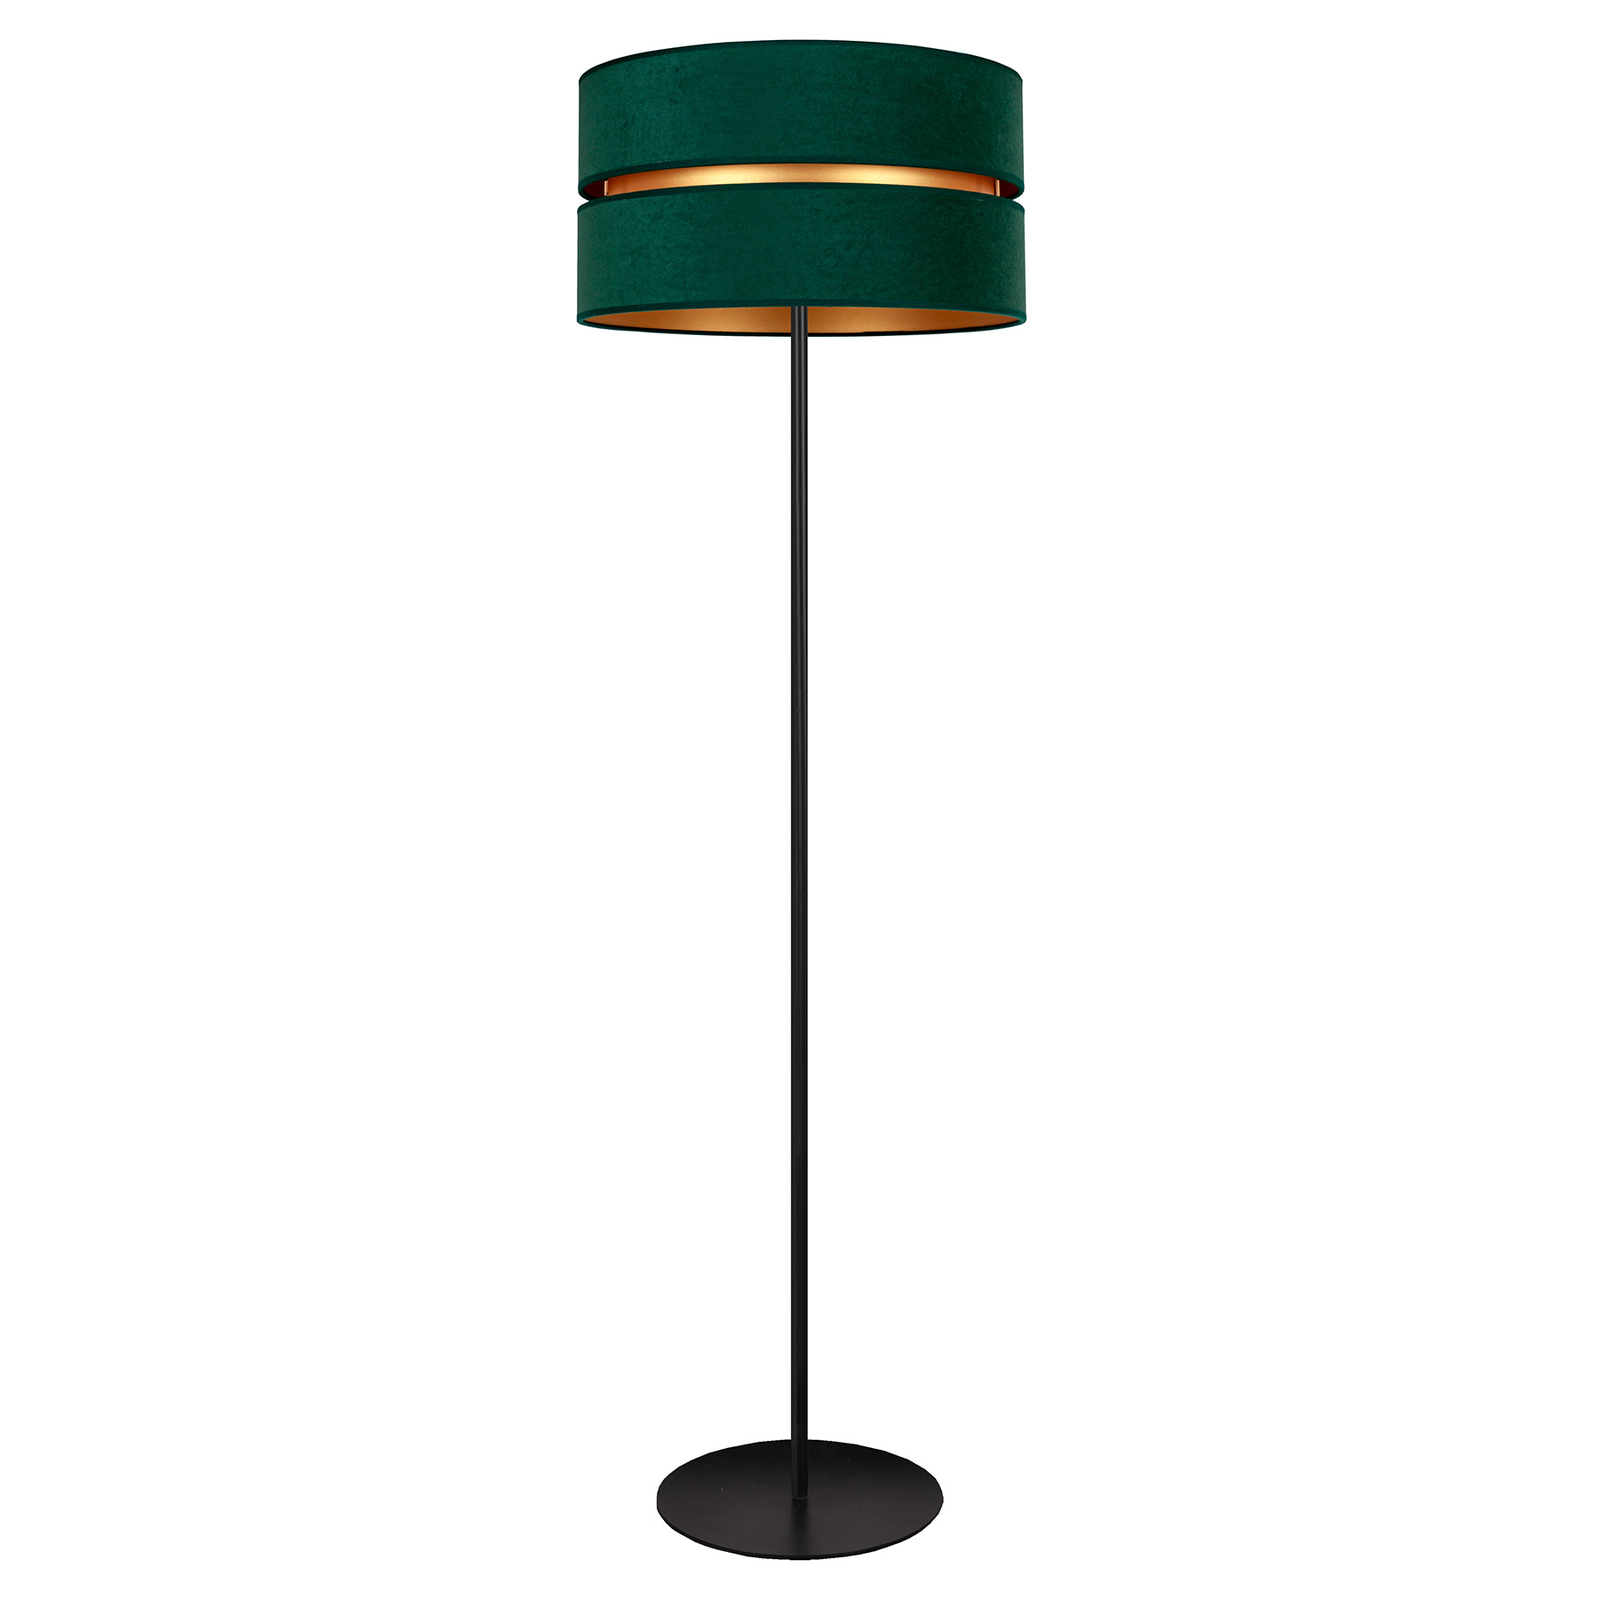 Stojacia lampa Duo, zelená/zlatá, Ø 40 cm 1-pl.